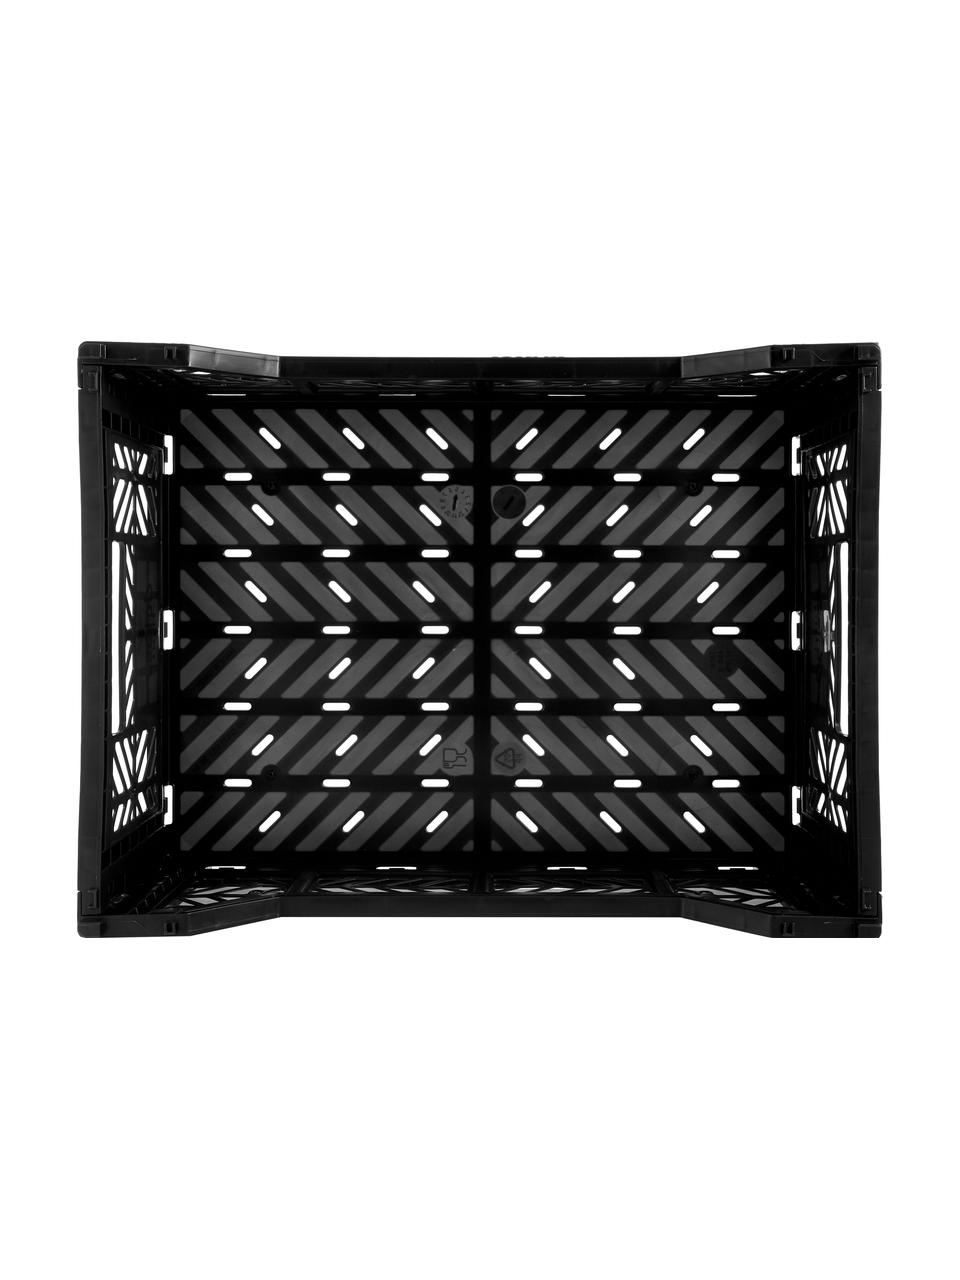 Bednička Black, Plast, Čierna, Š 40 x V 14 cm